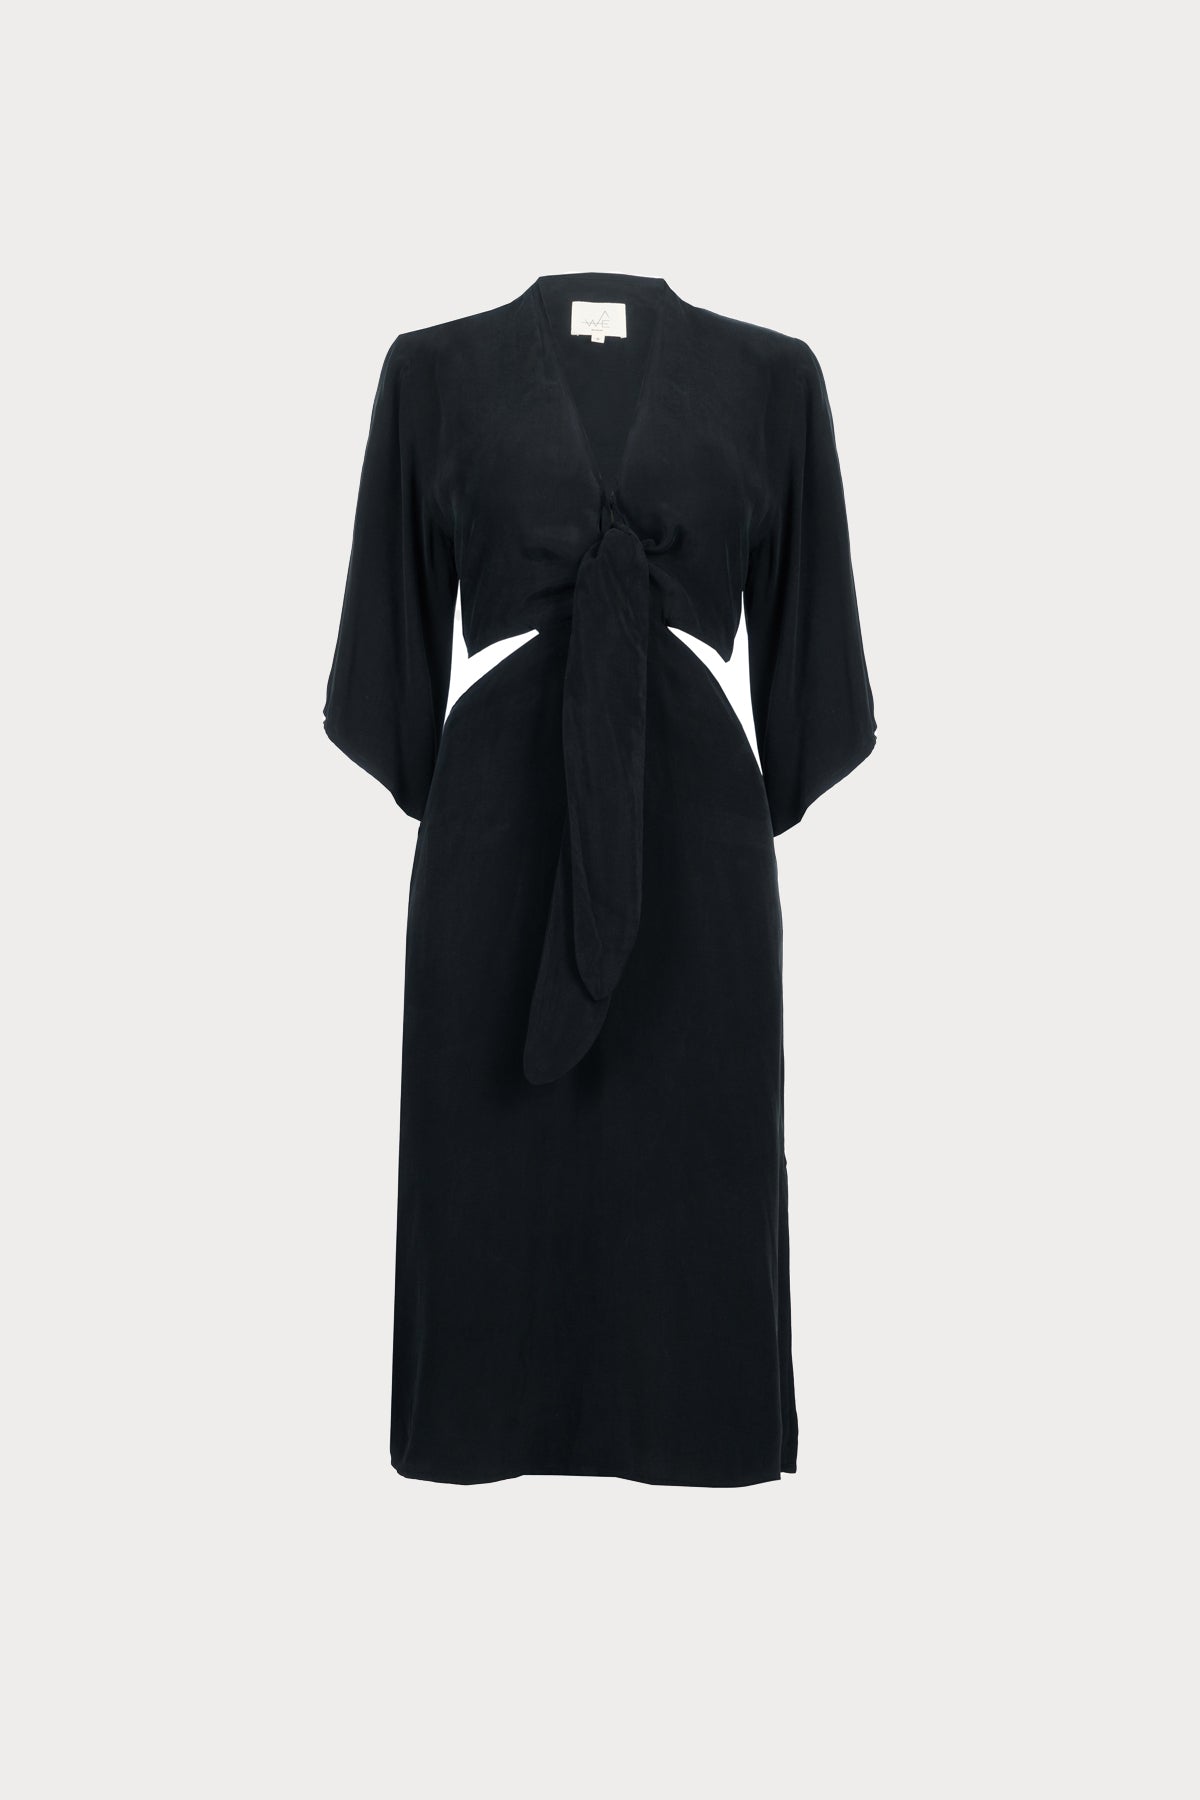 Mavis Black Vegan Silk Midi Dress